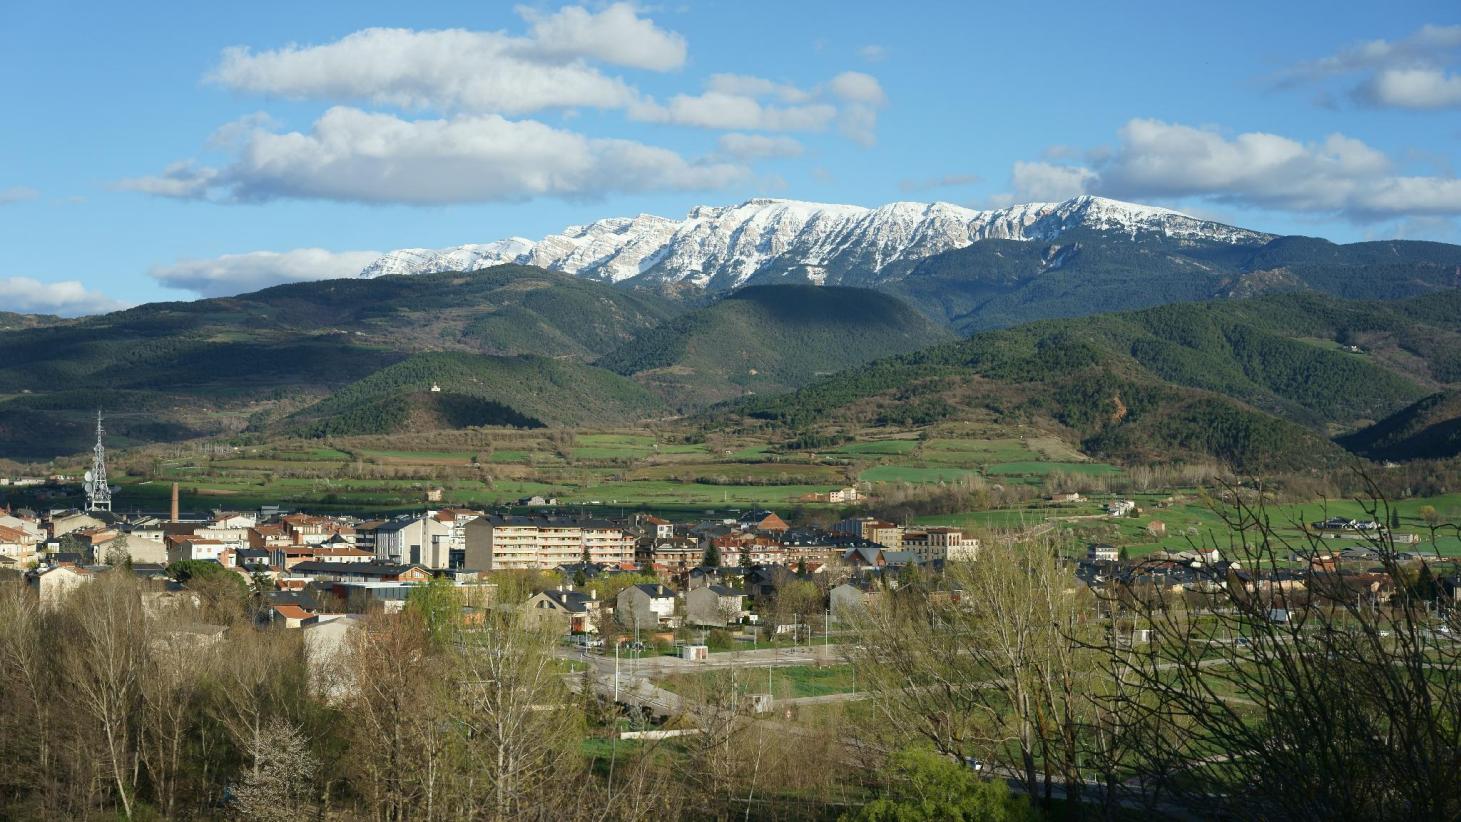 Con la llegada del invierno, La Seu d'Urgell atrae mucho turismo